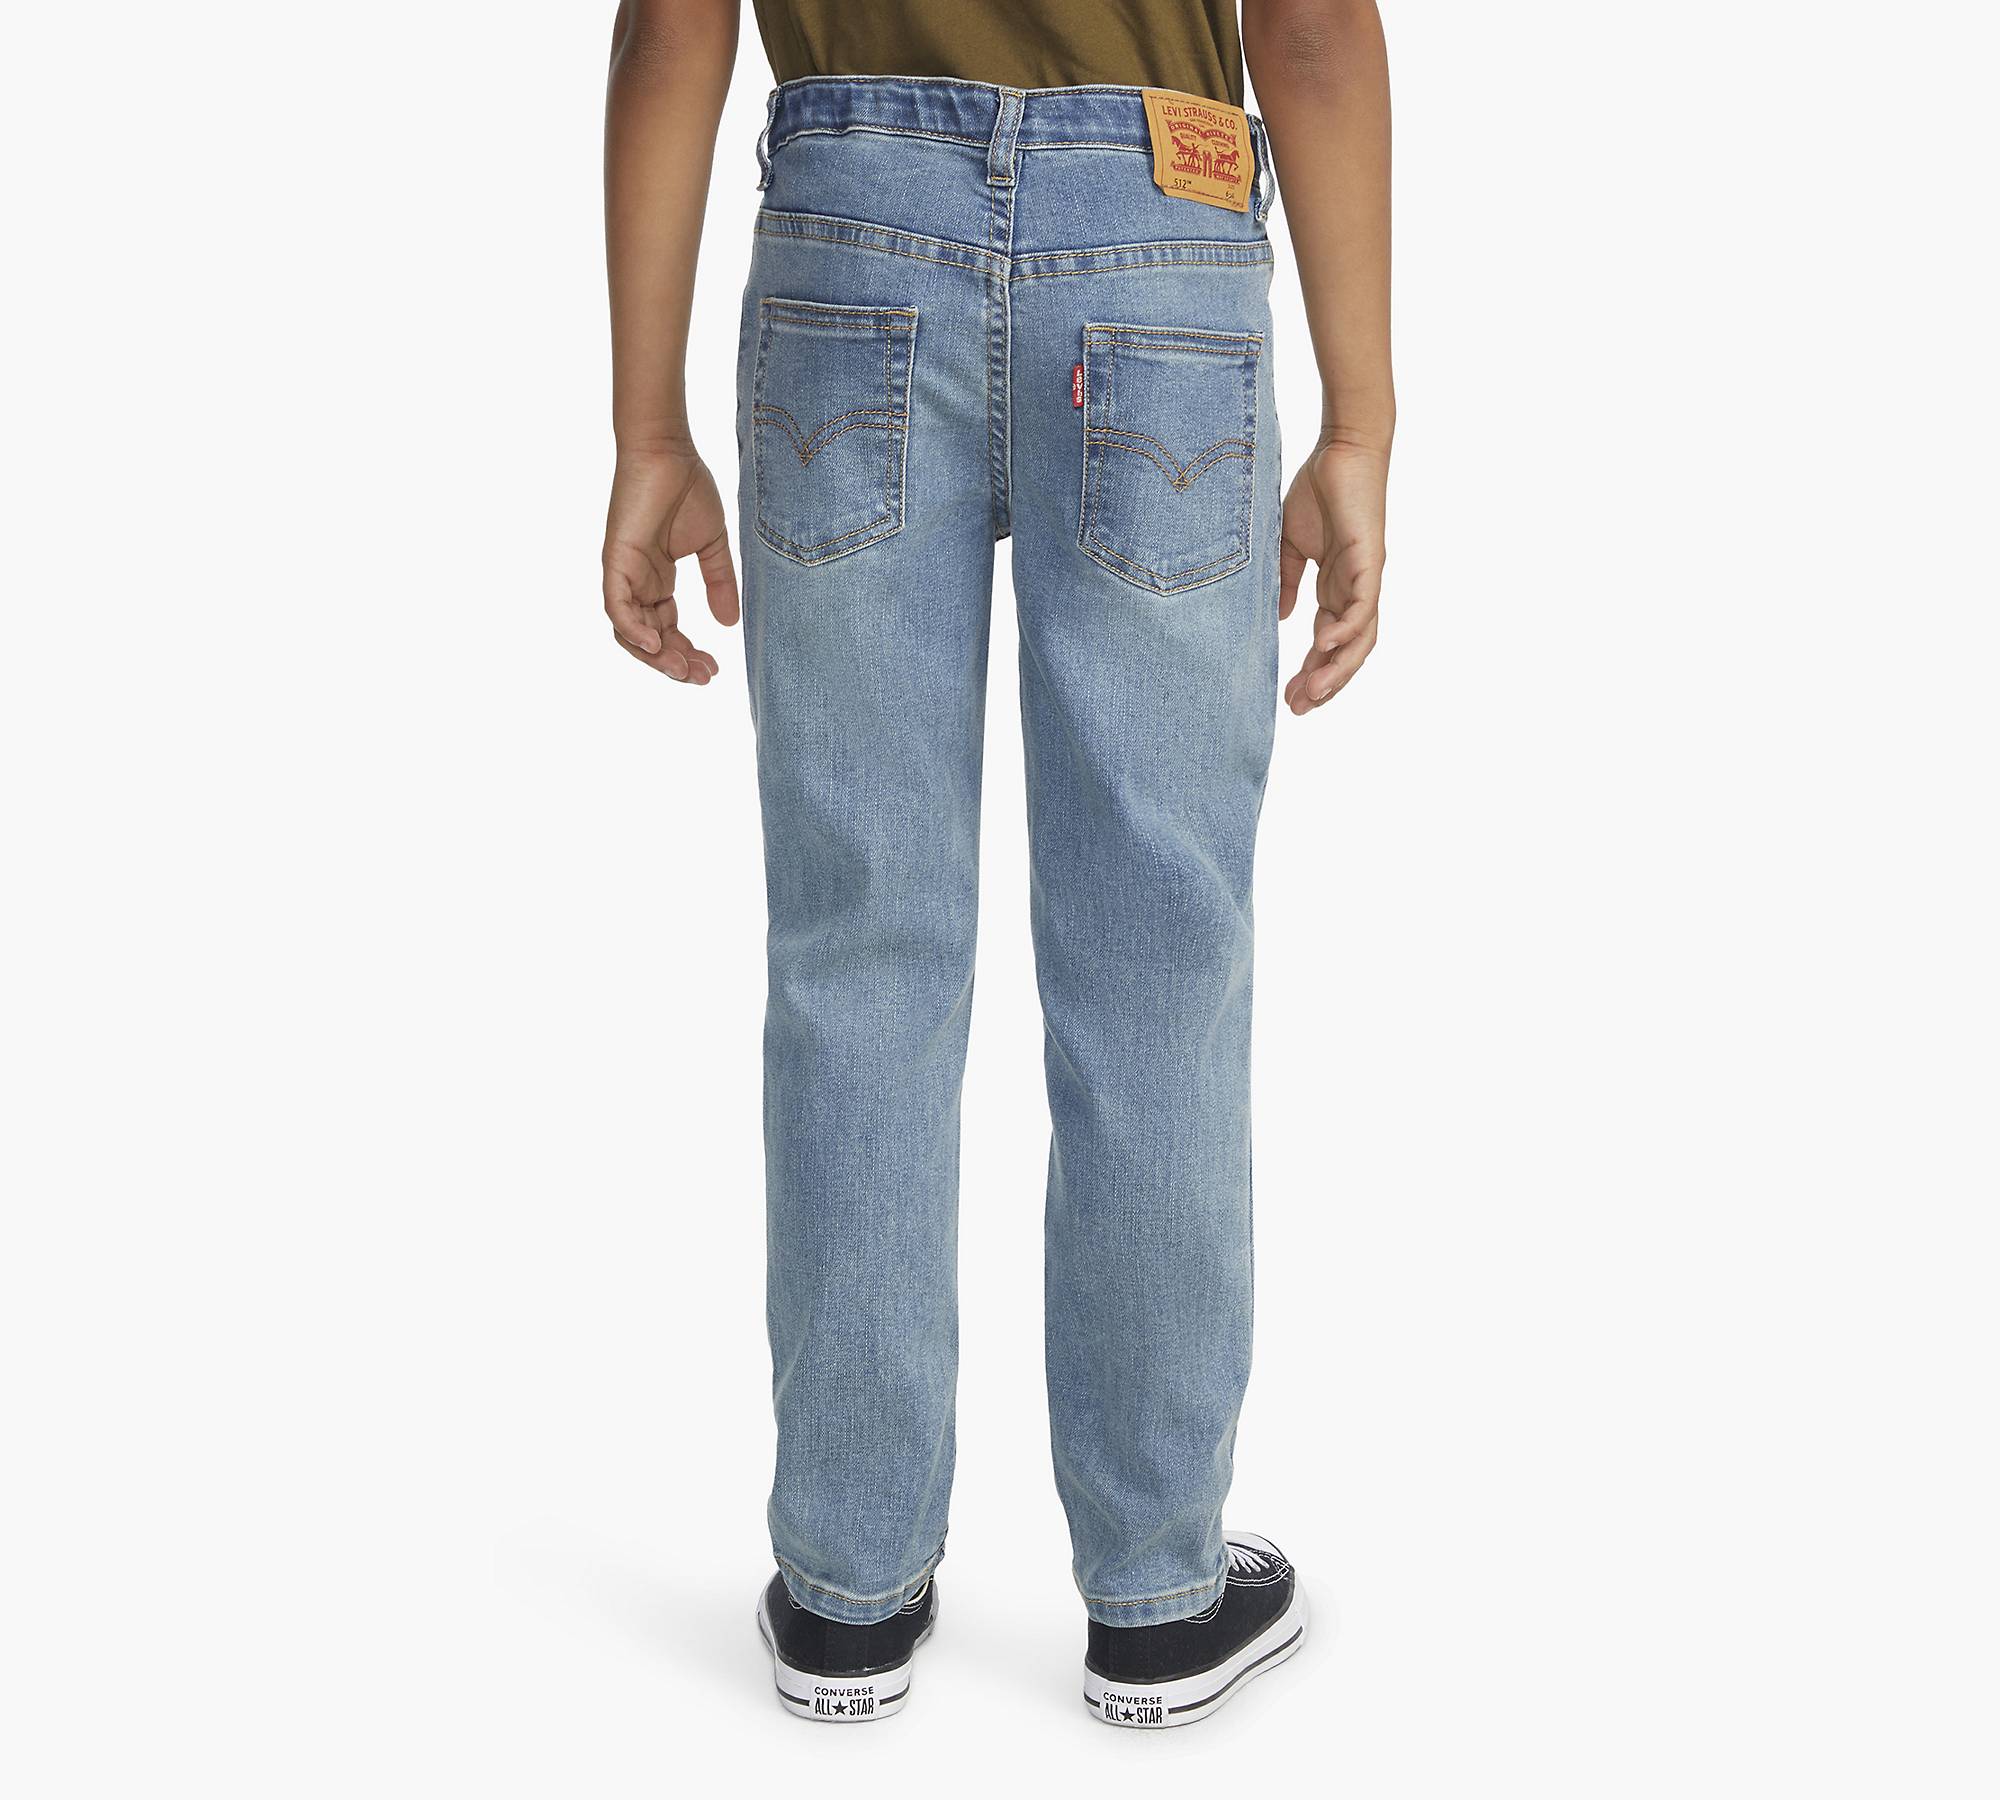 512™ Slim Taper Performance Little Boys Jeans 4-7x - Medium Wash | Levi ...